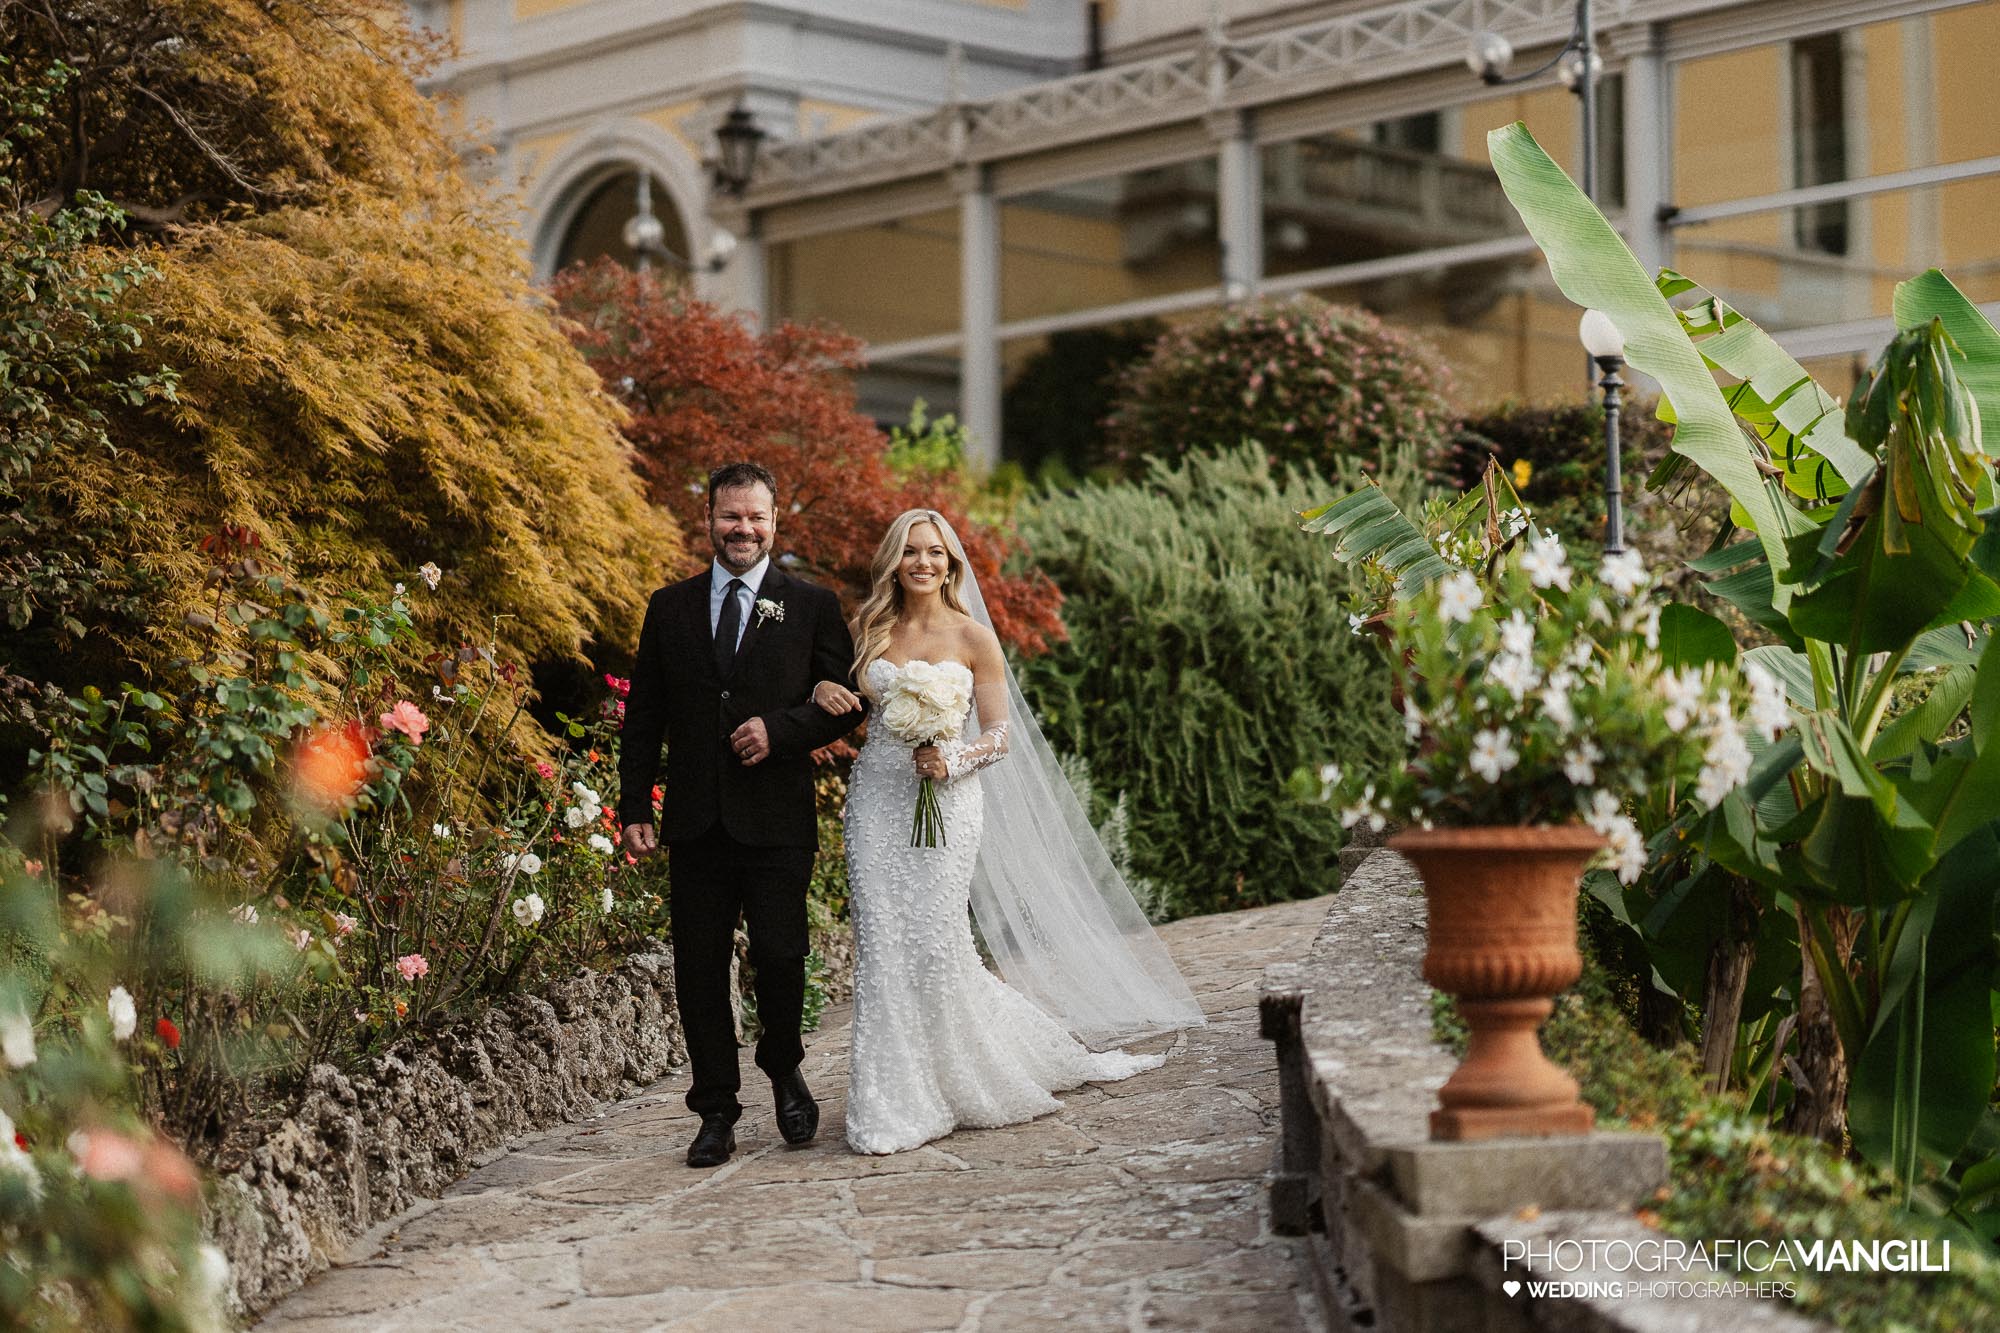 wedding photo villa serbelloni bellagio como lake london dylan 056